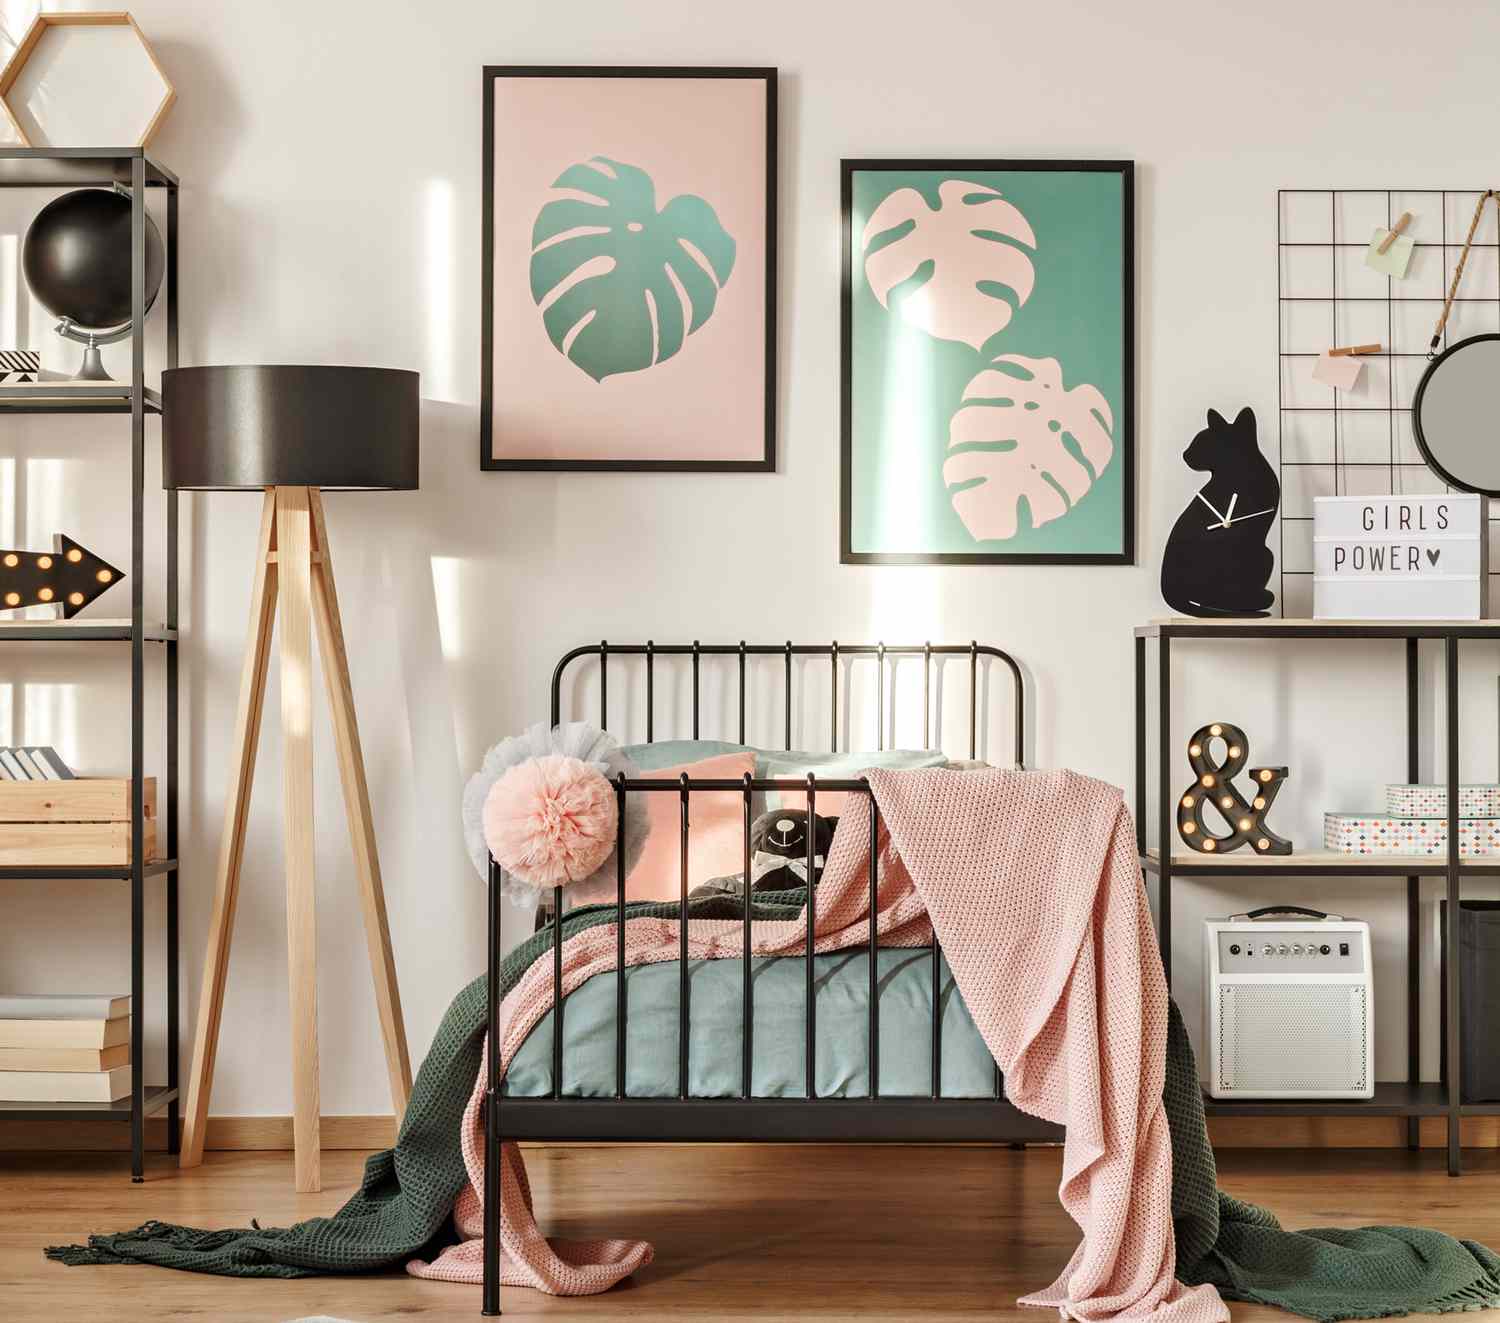 Dorm room ideas - decor, design, and organization